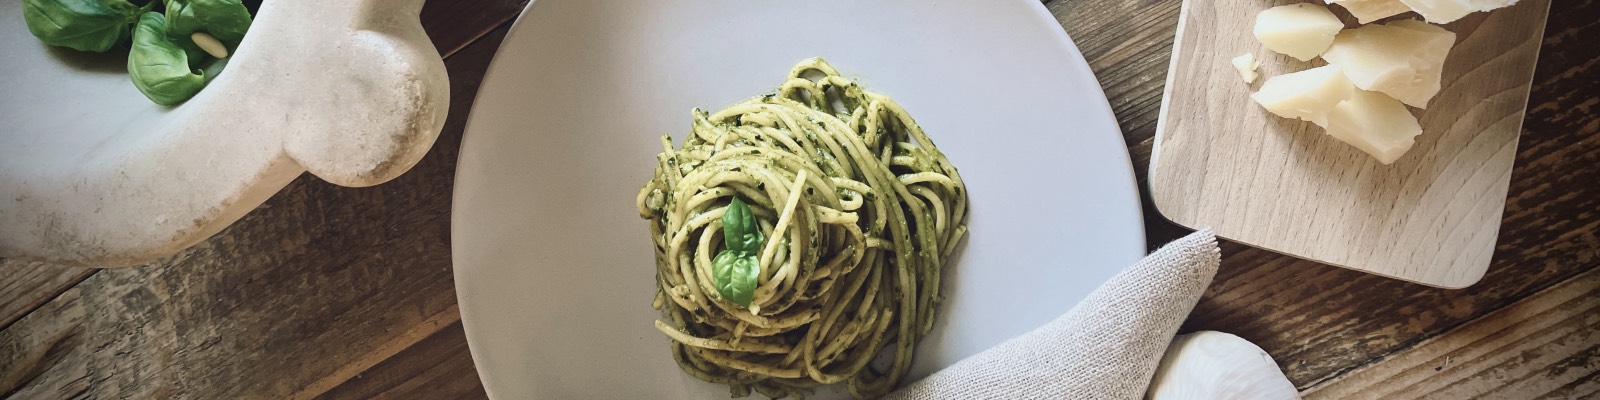 Pasta Garofalo - Spaghetti with Ligurian pesto